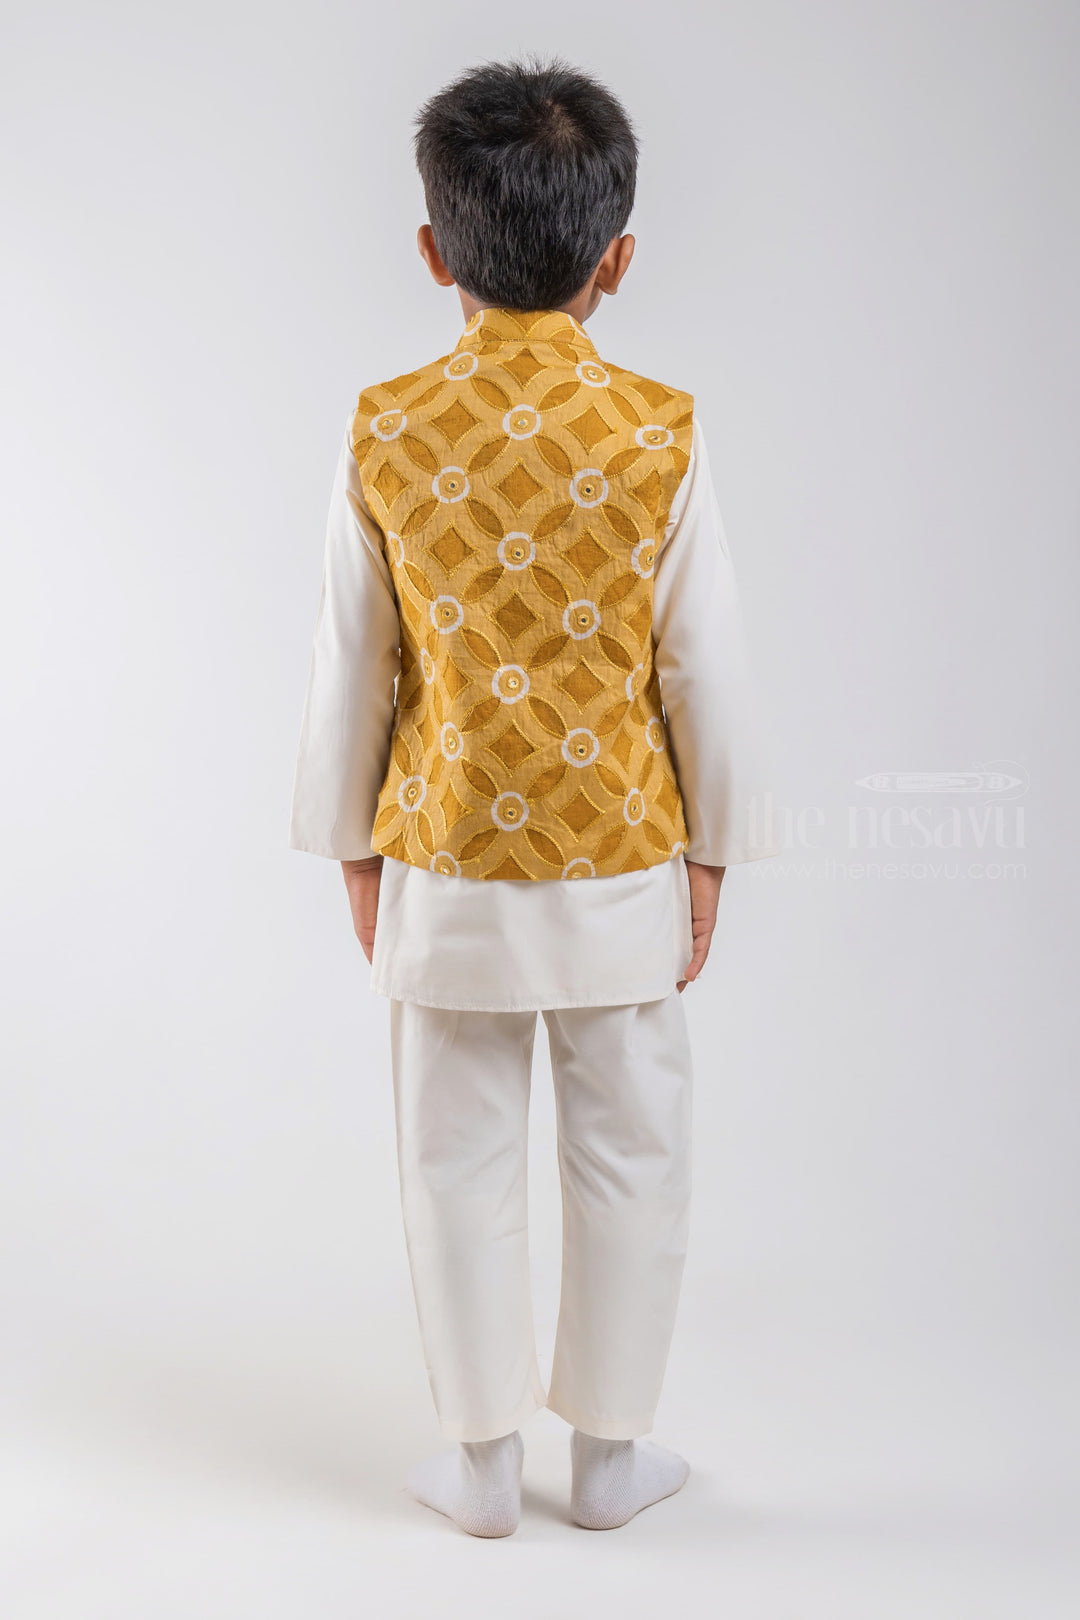 The Nesavu Boys Jacket Sets White Solid Cotton Kurta and Pant with Geometrical Printed Yellow Overcoat for Boys psr silks Nesavu